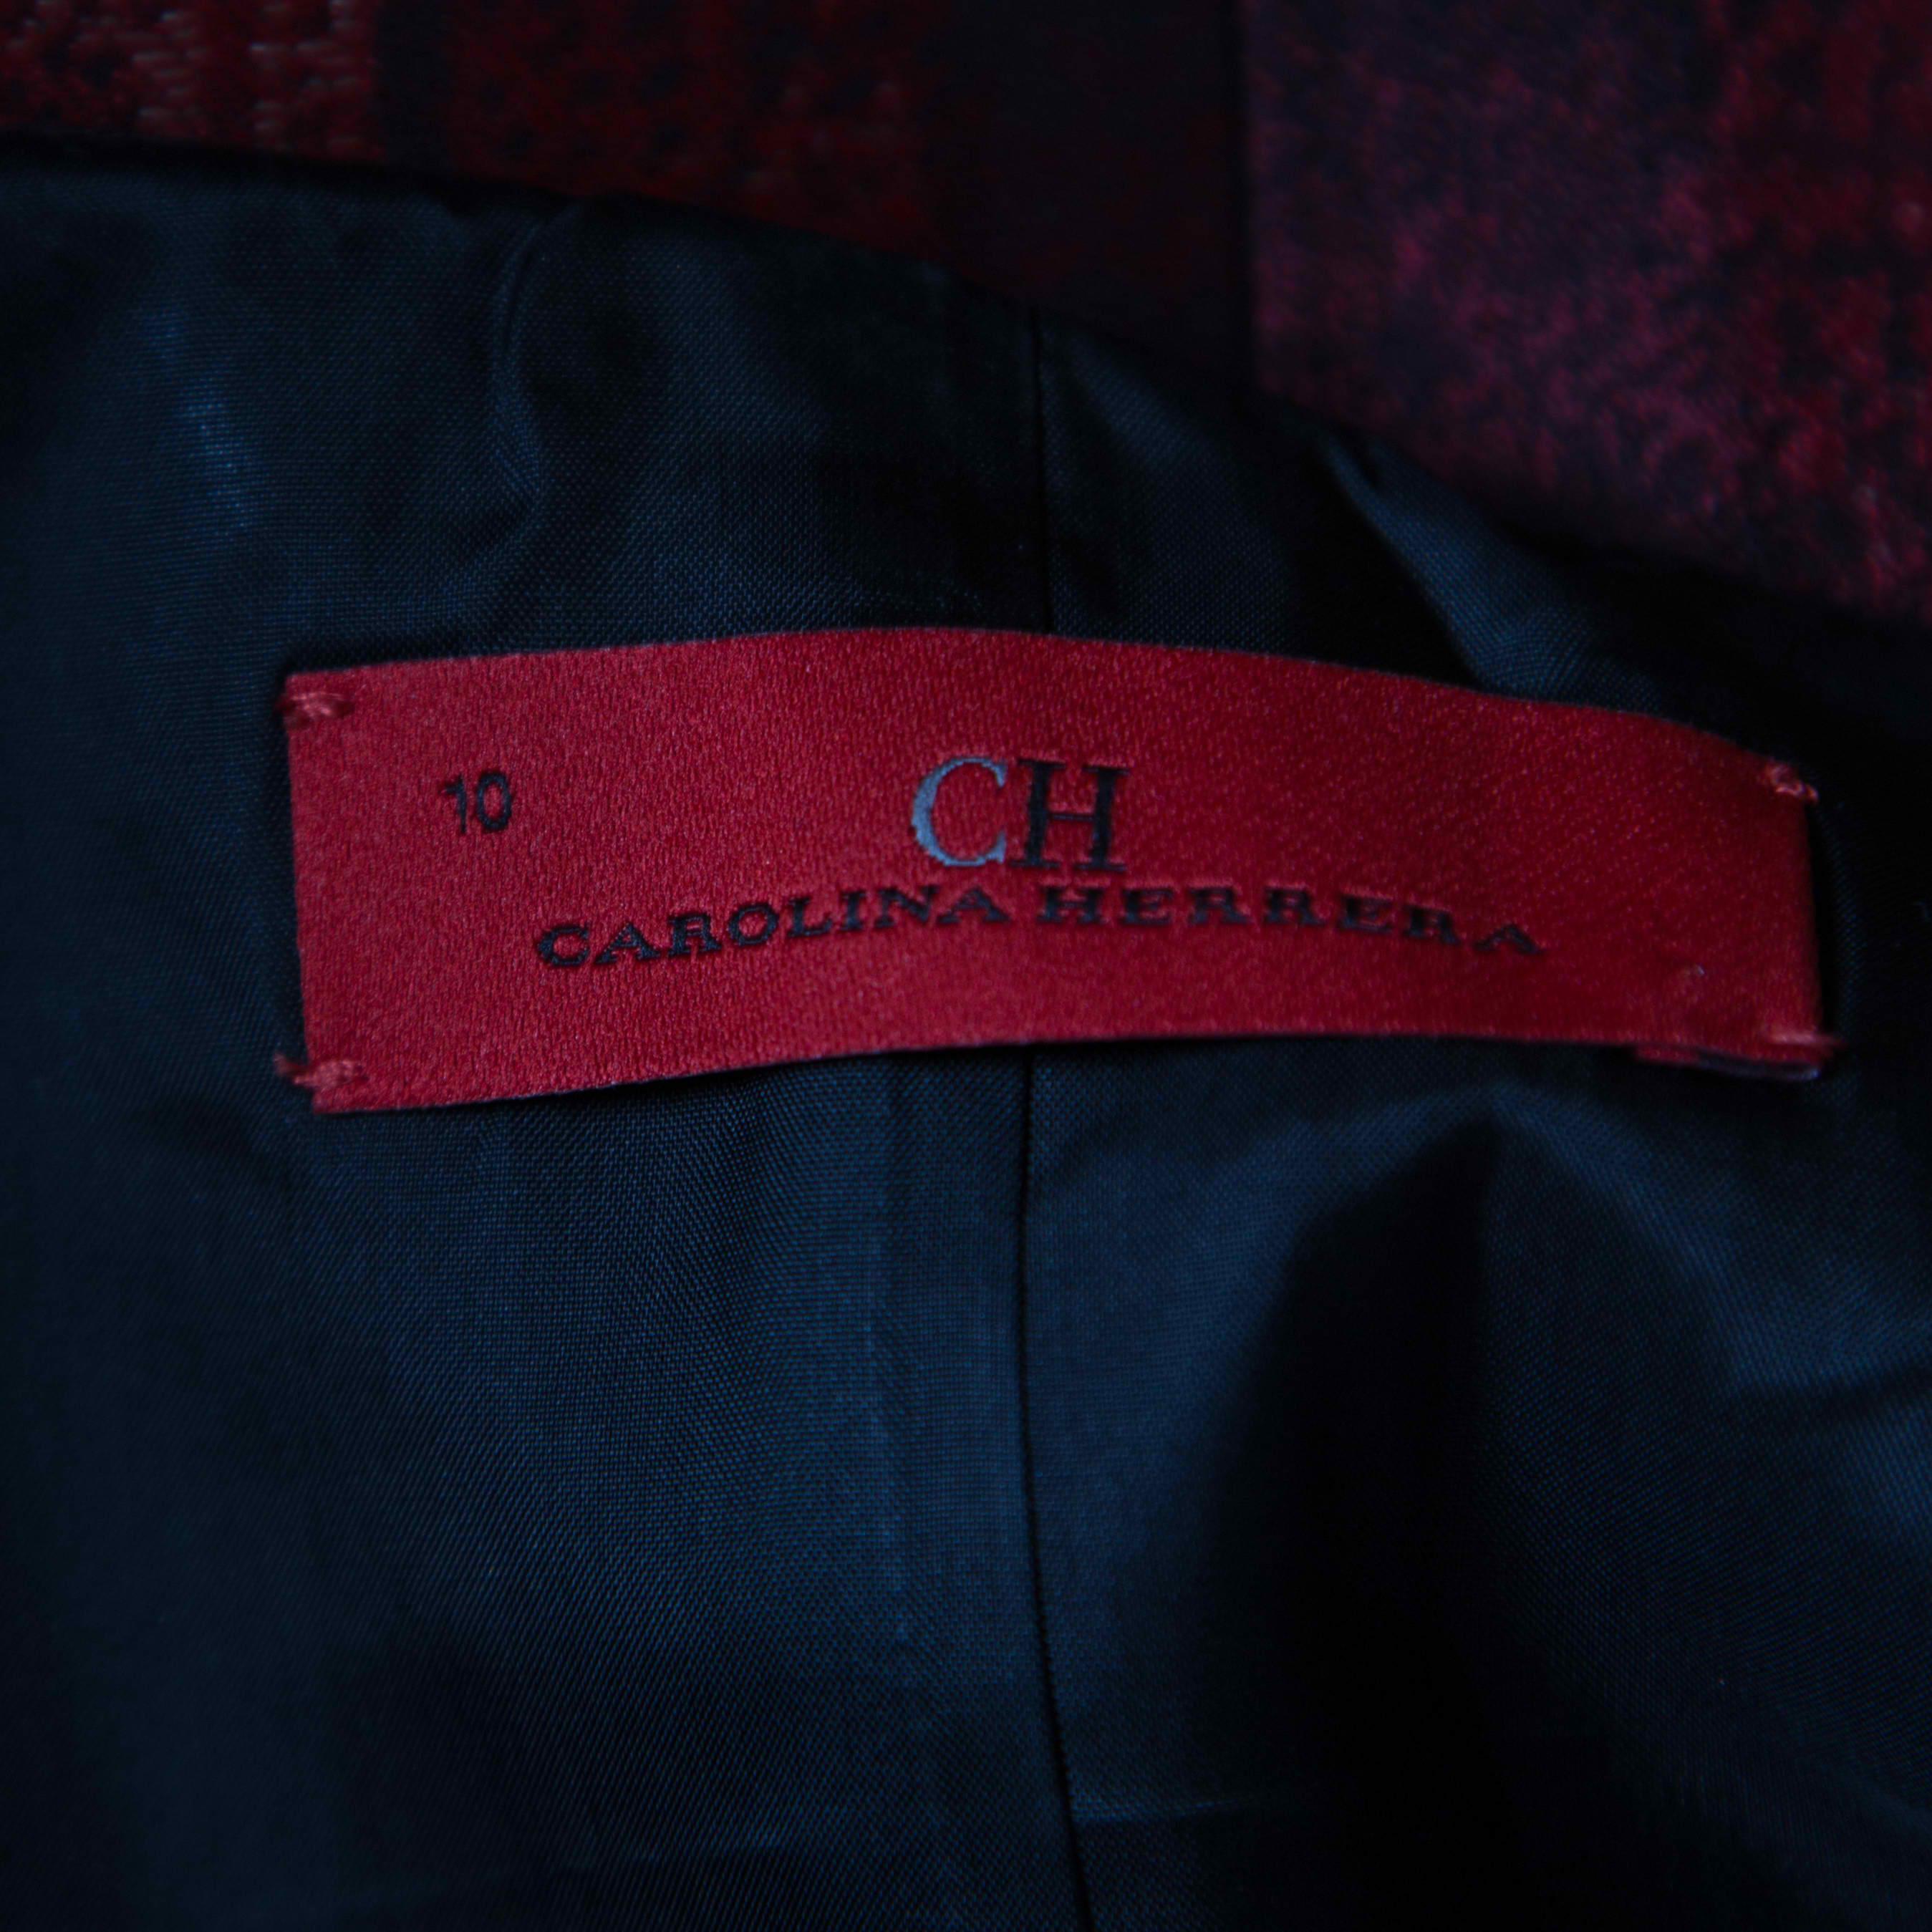 Brown CH Carolina Herrera Red and Black Abstract Pattern Jacquard Sheath Dress L